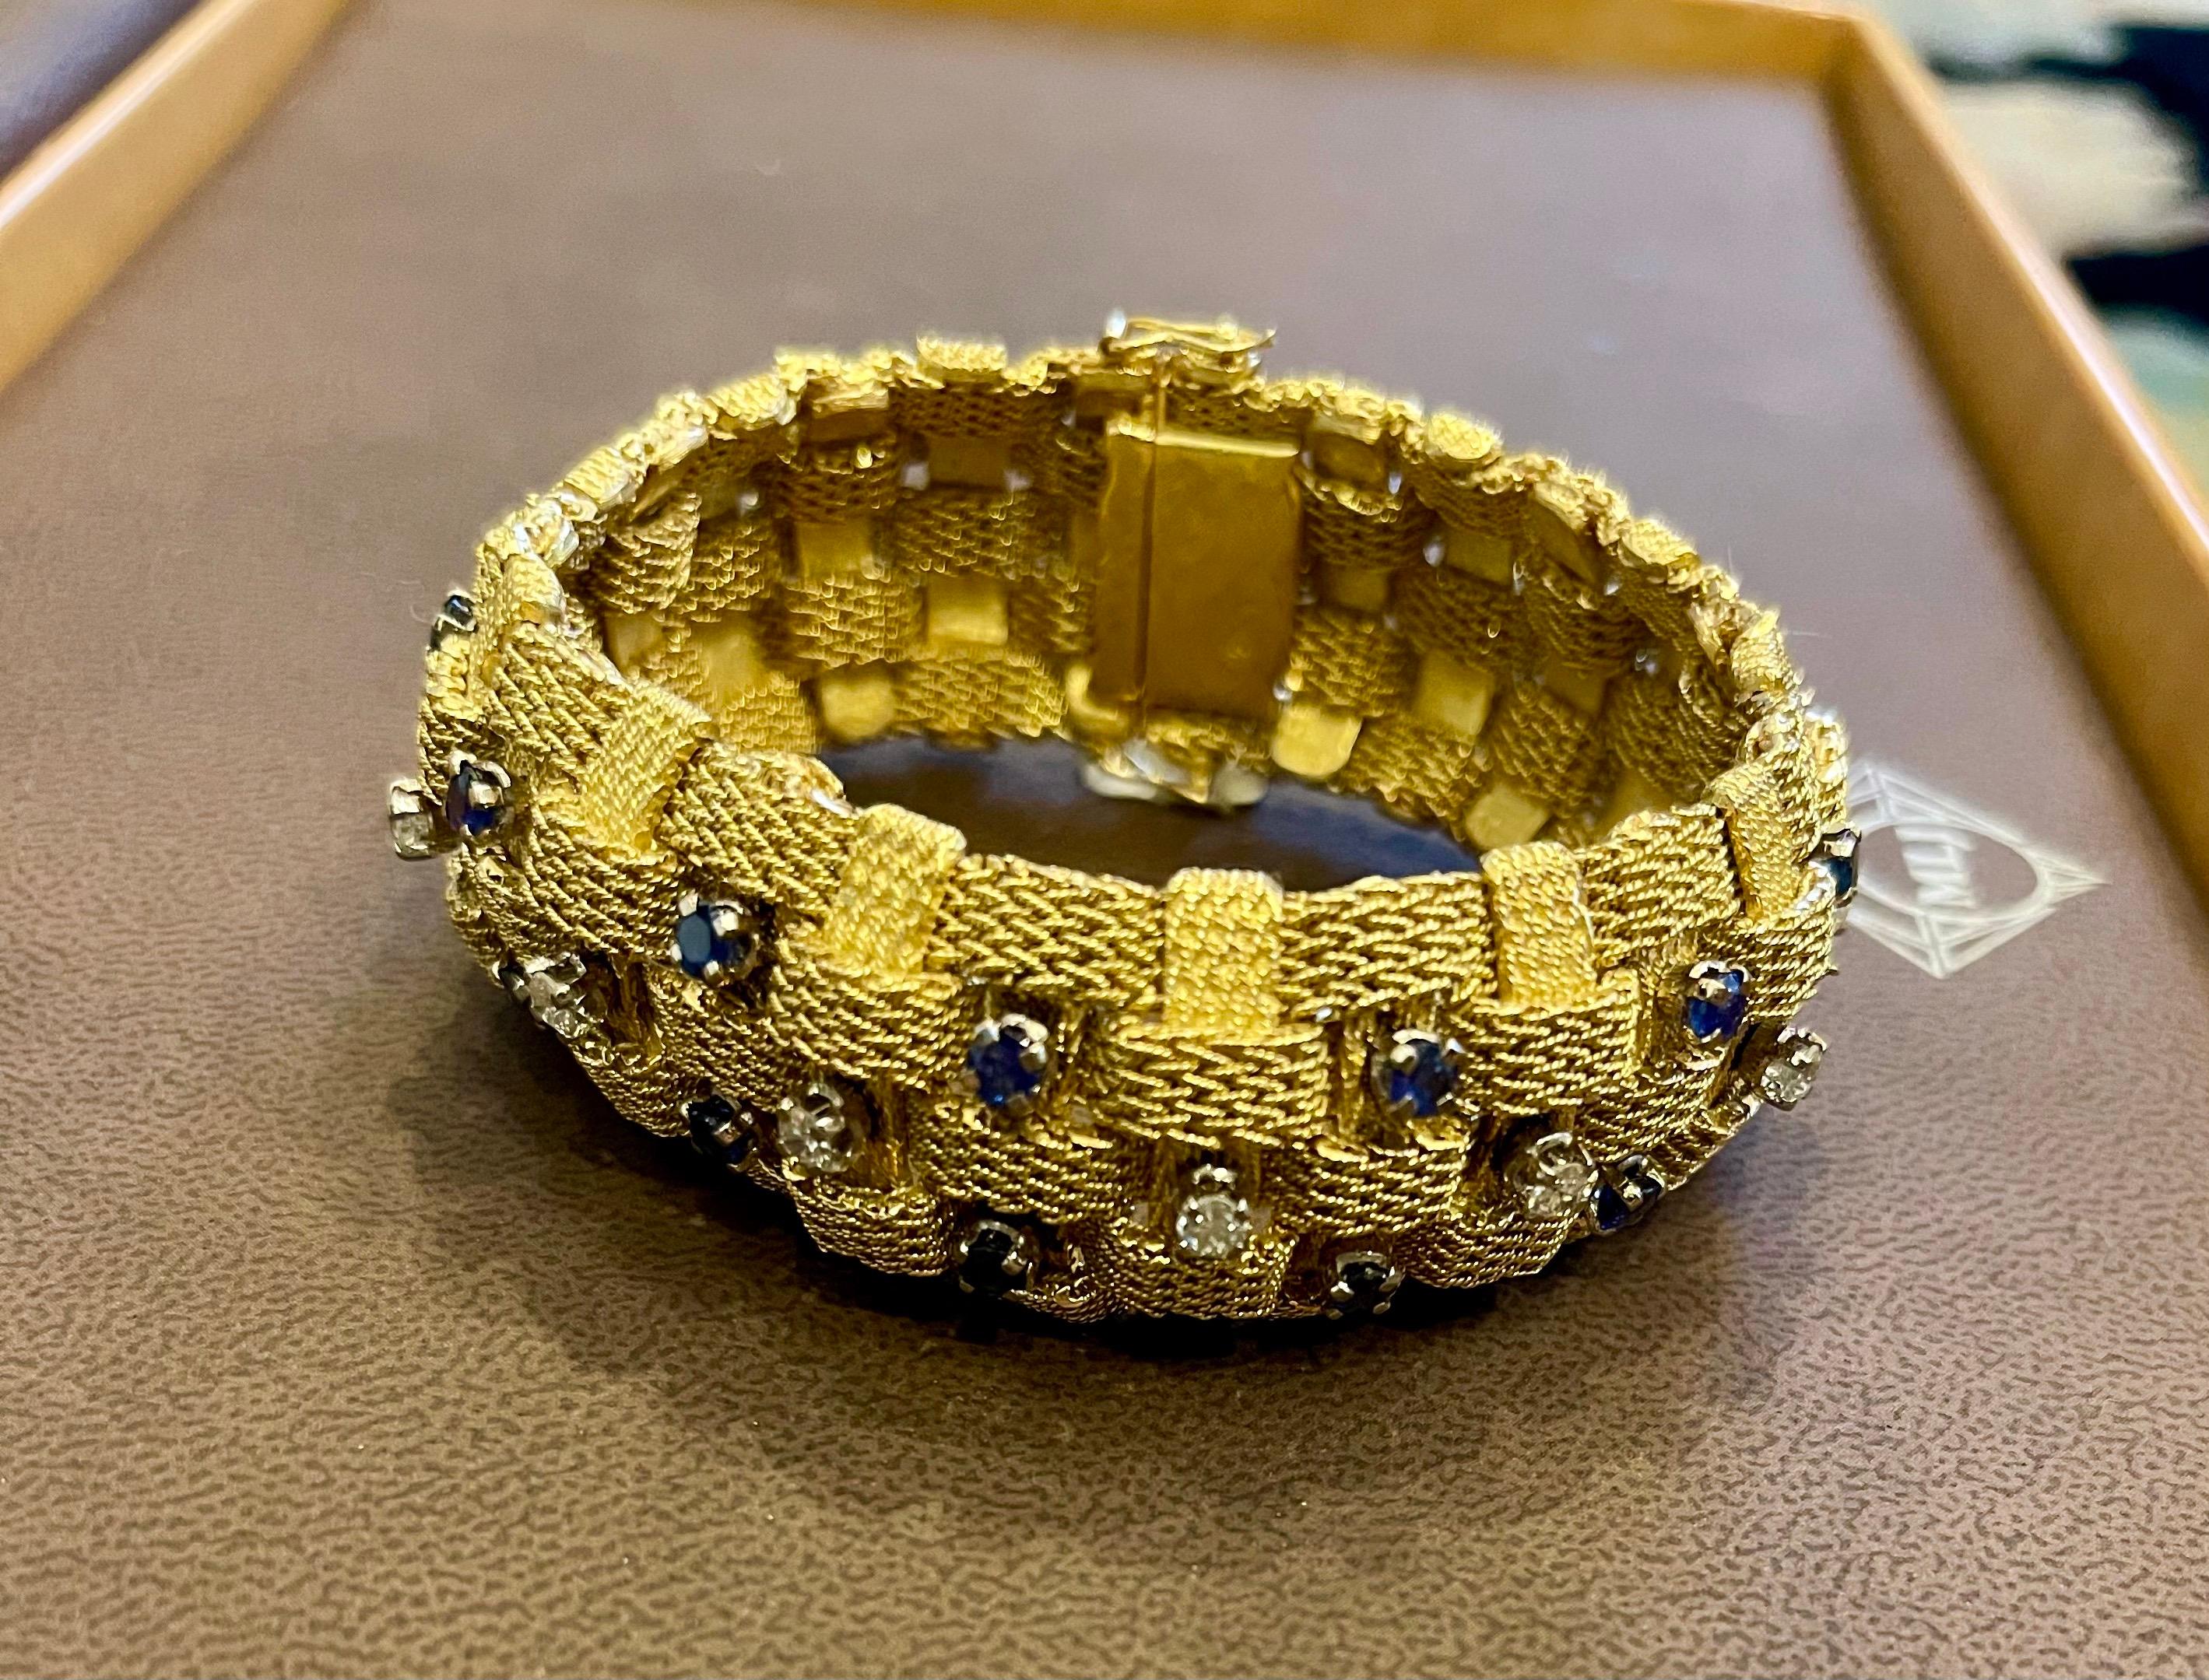 3 Carat Sapphire and 2 Carat Diamond Bracelet in 18 Karat Yellow Gold 116 Gm For Sale 13